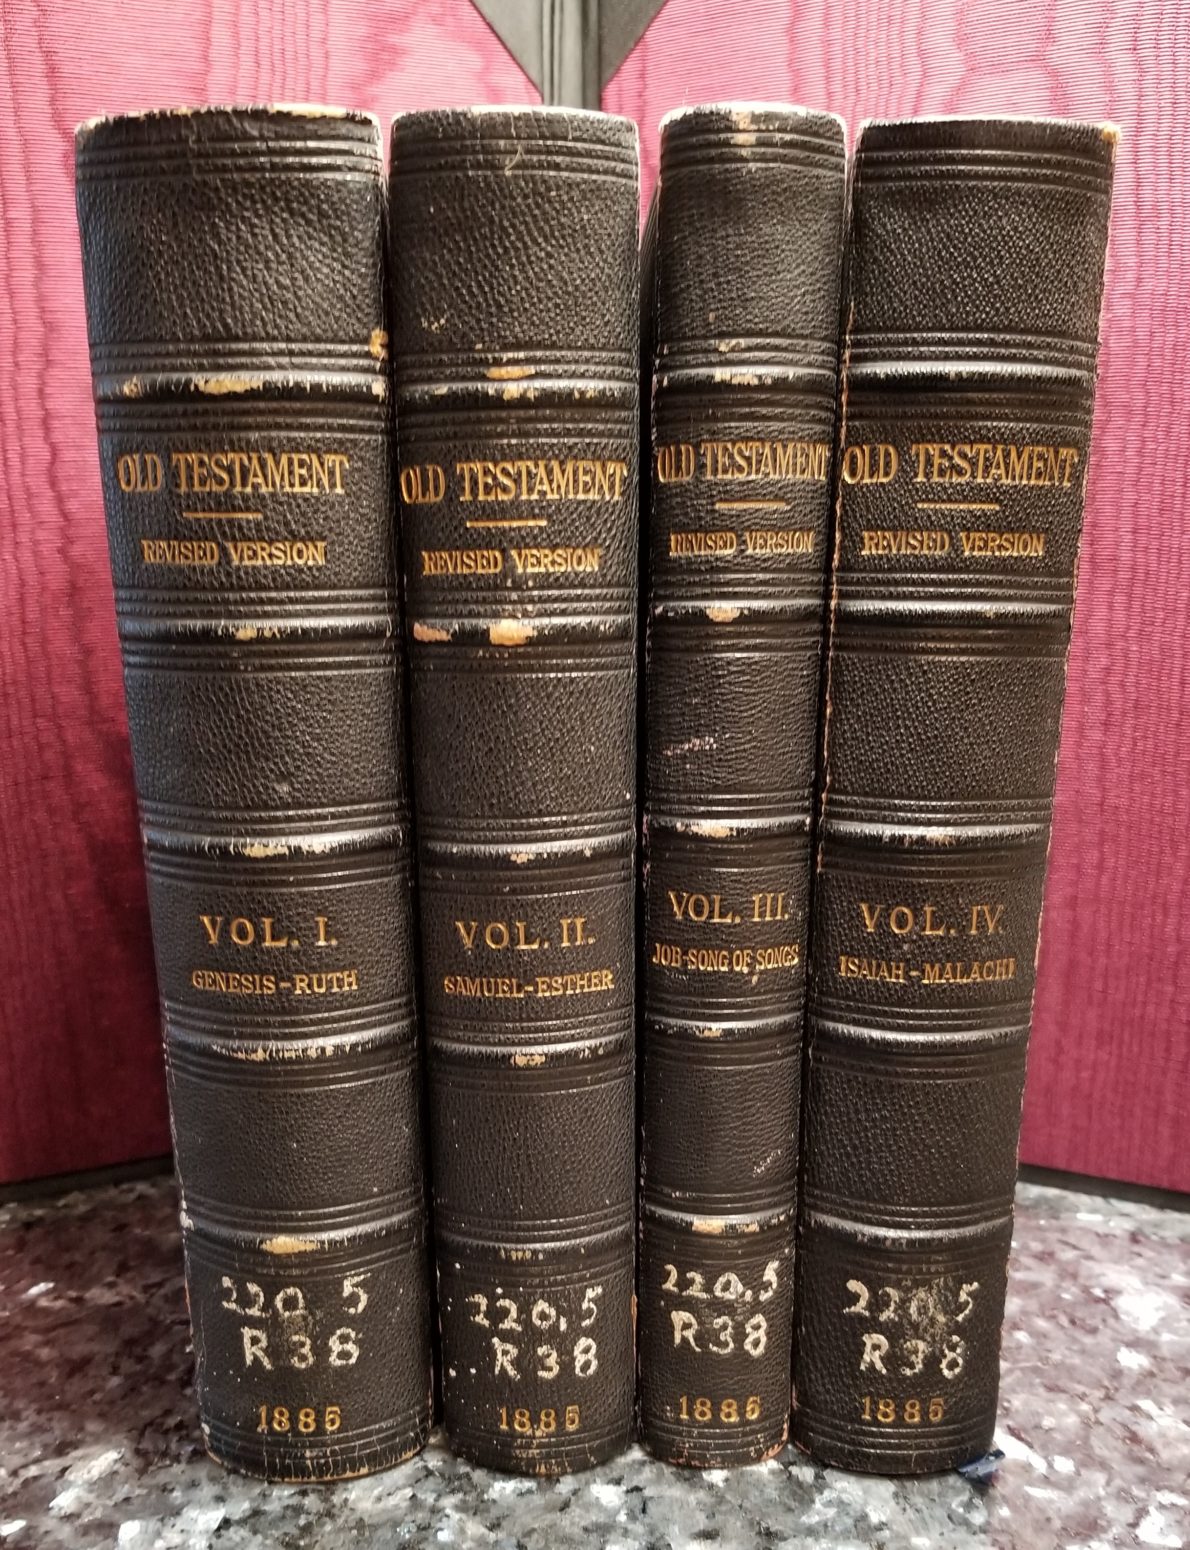 revised-version-1885-old-testament-4-vols-presentation-copy-historic-bibles-engravings